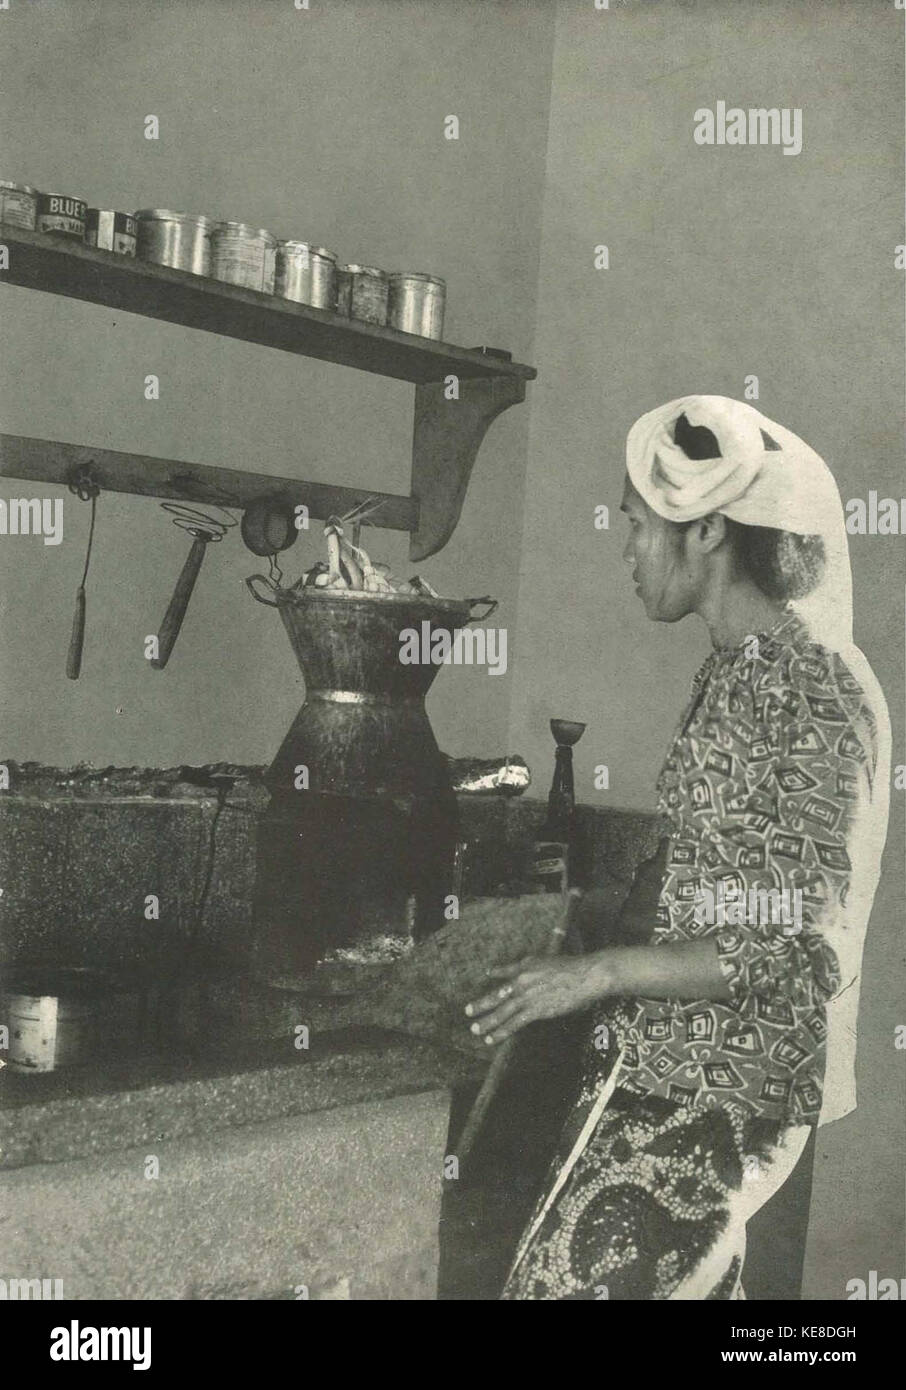 Kochen Frau ketupat, Wanita di Indonesien p53 (Ministerium für Informationen) Stockfoto